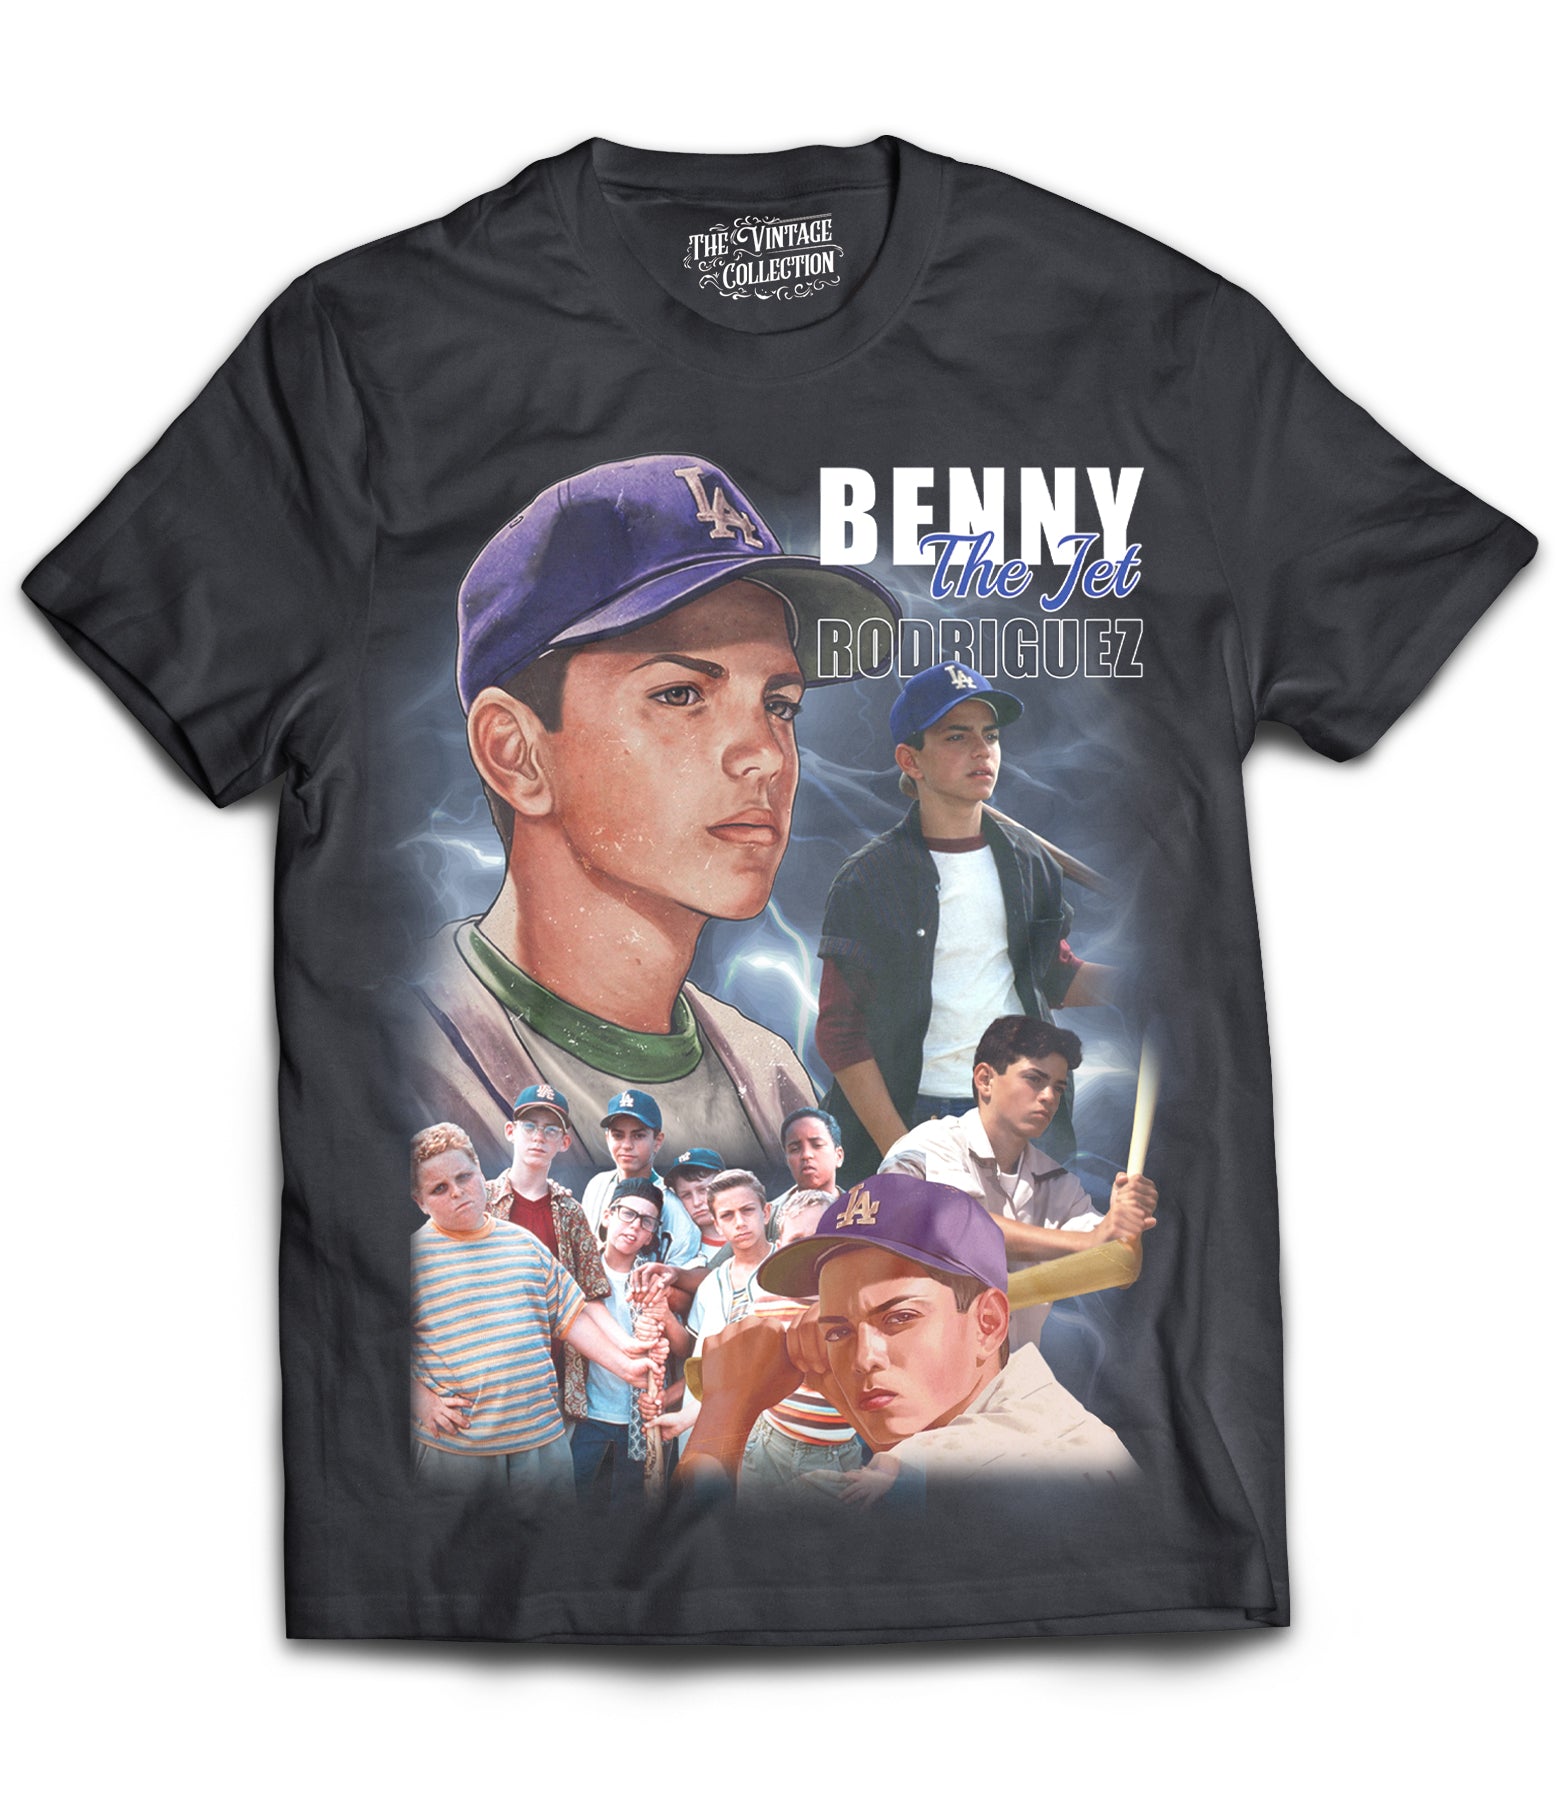 Benny The Jet Tribute T-Shirt